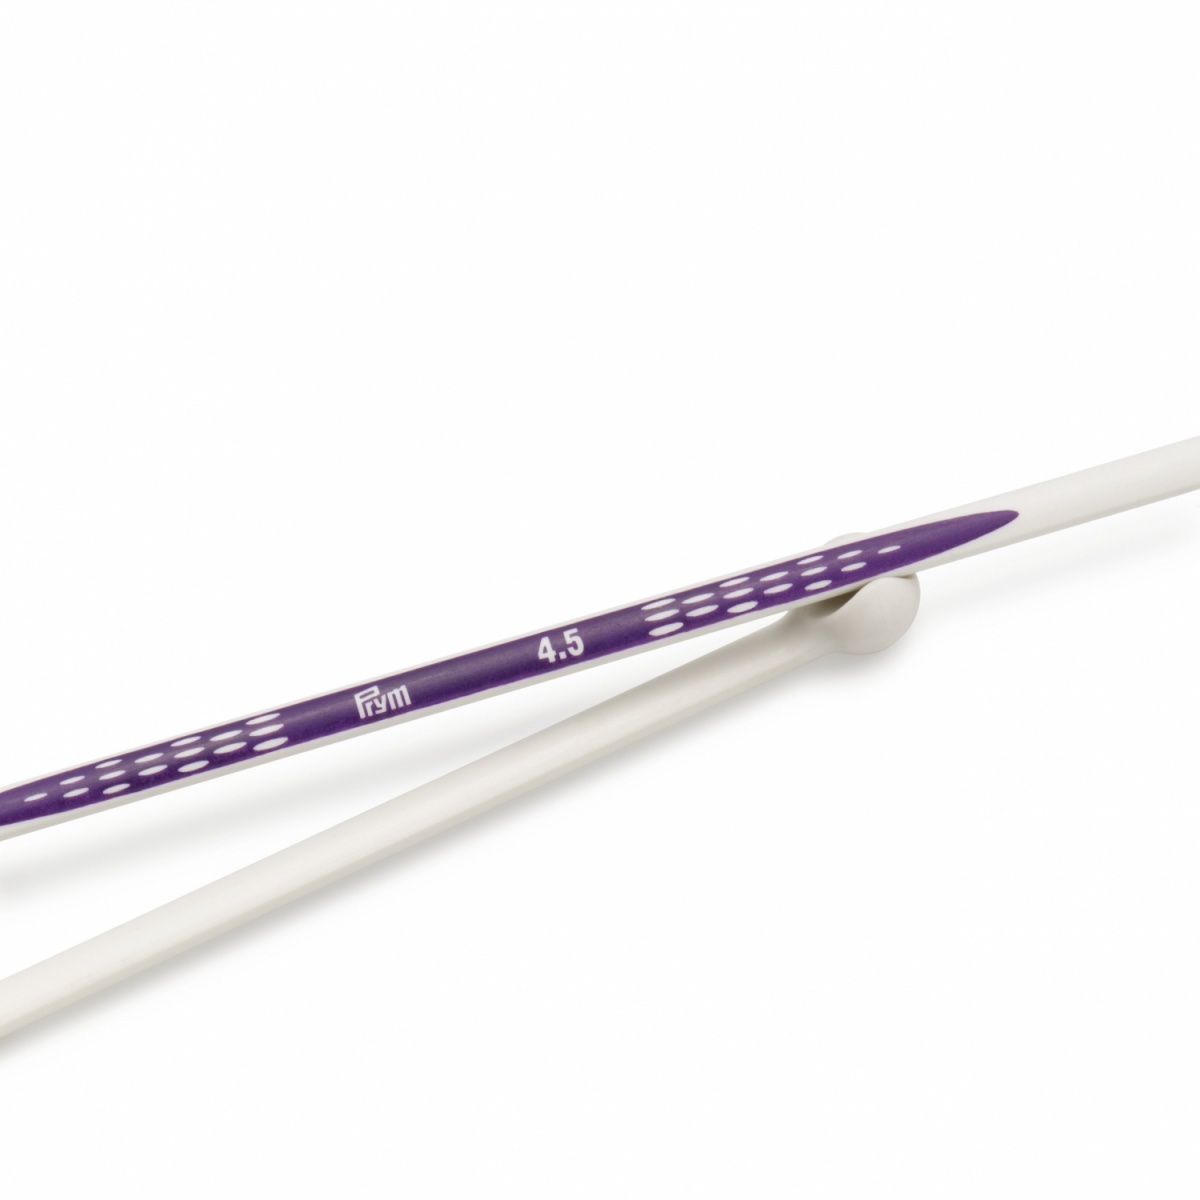 Single-pointed knitting needles, Ergonomic, 4,5mm фото 3